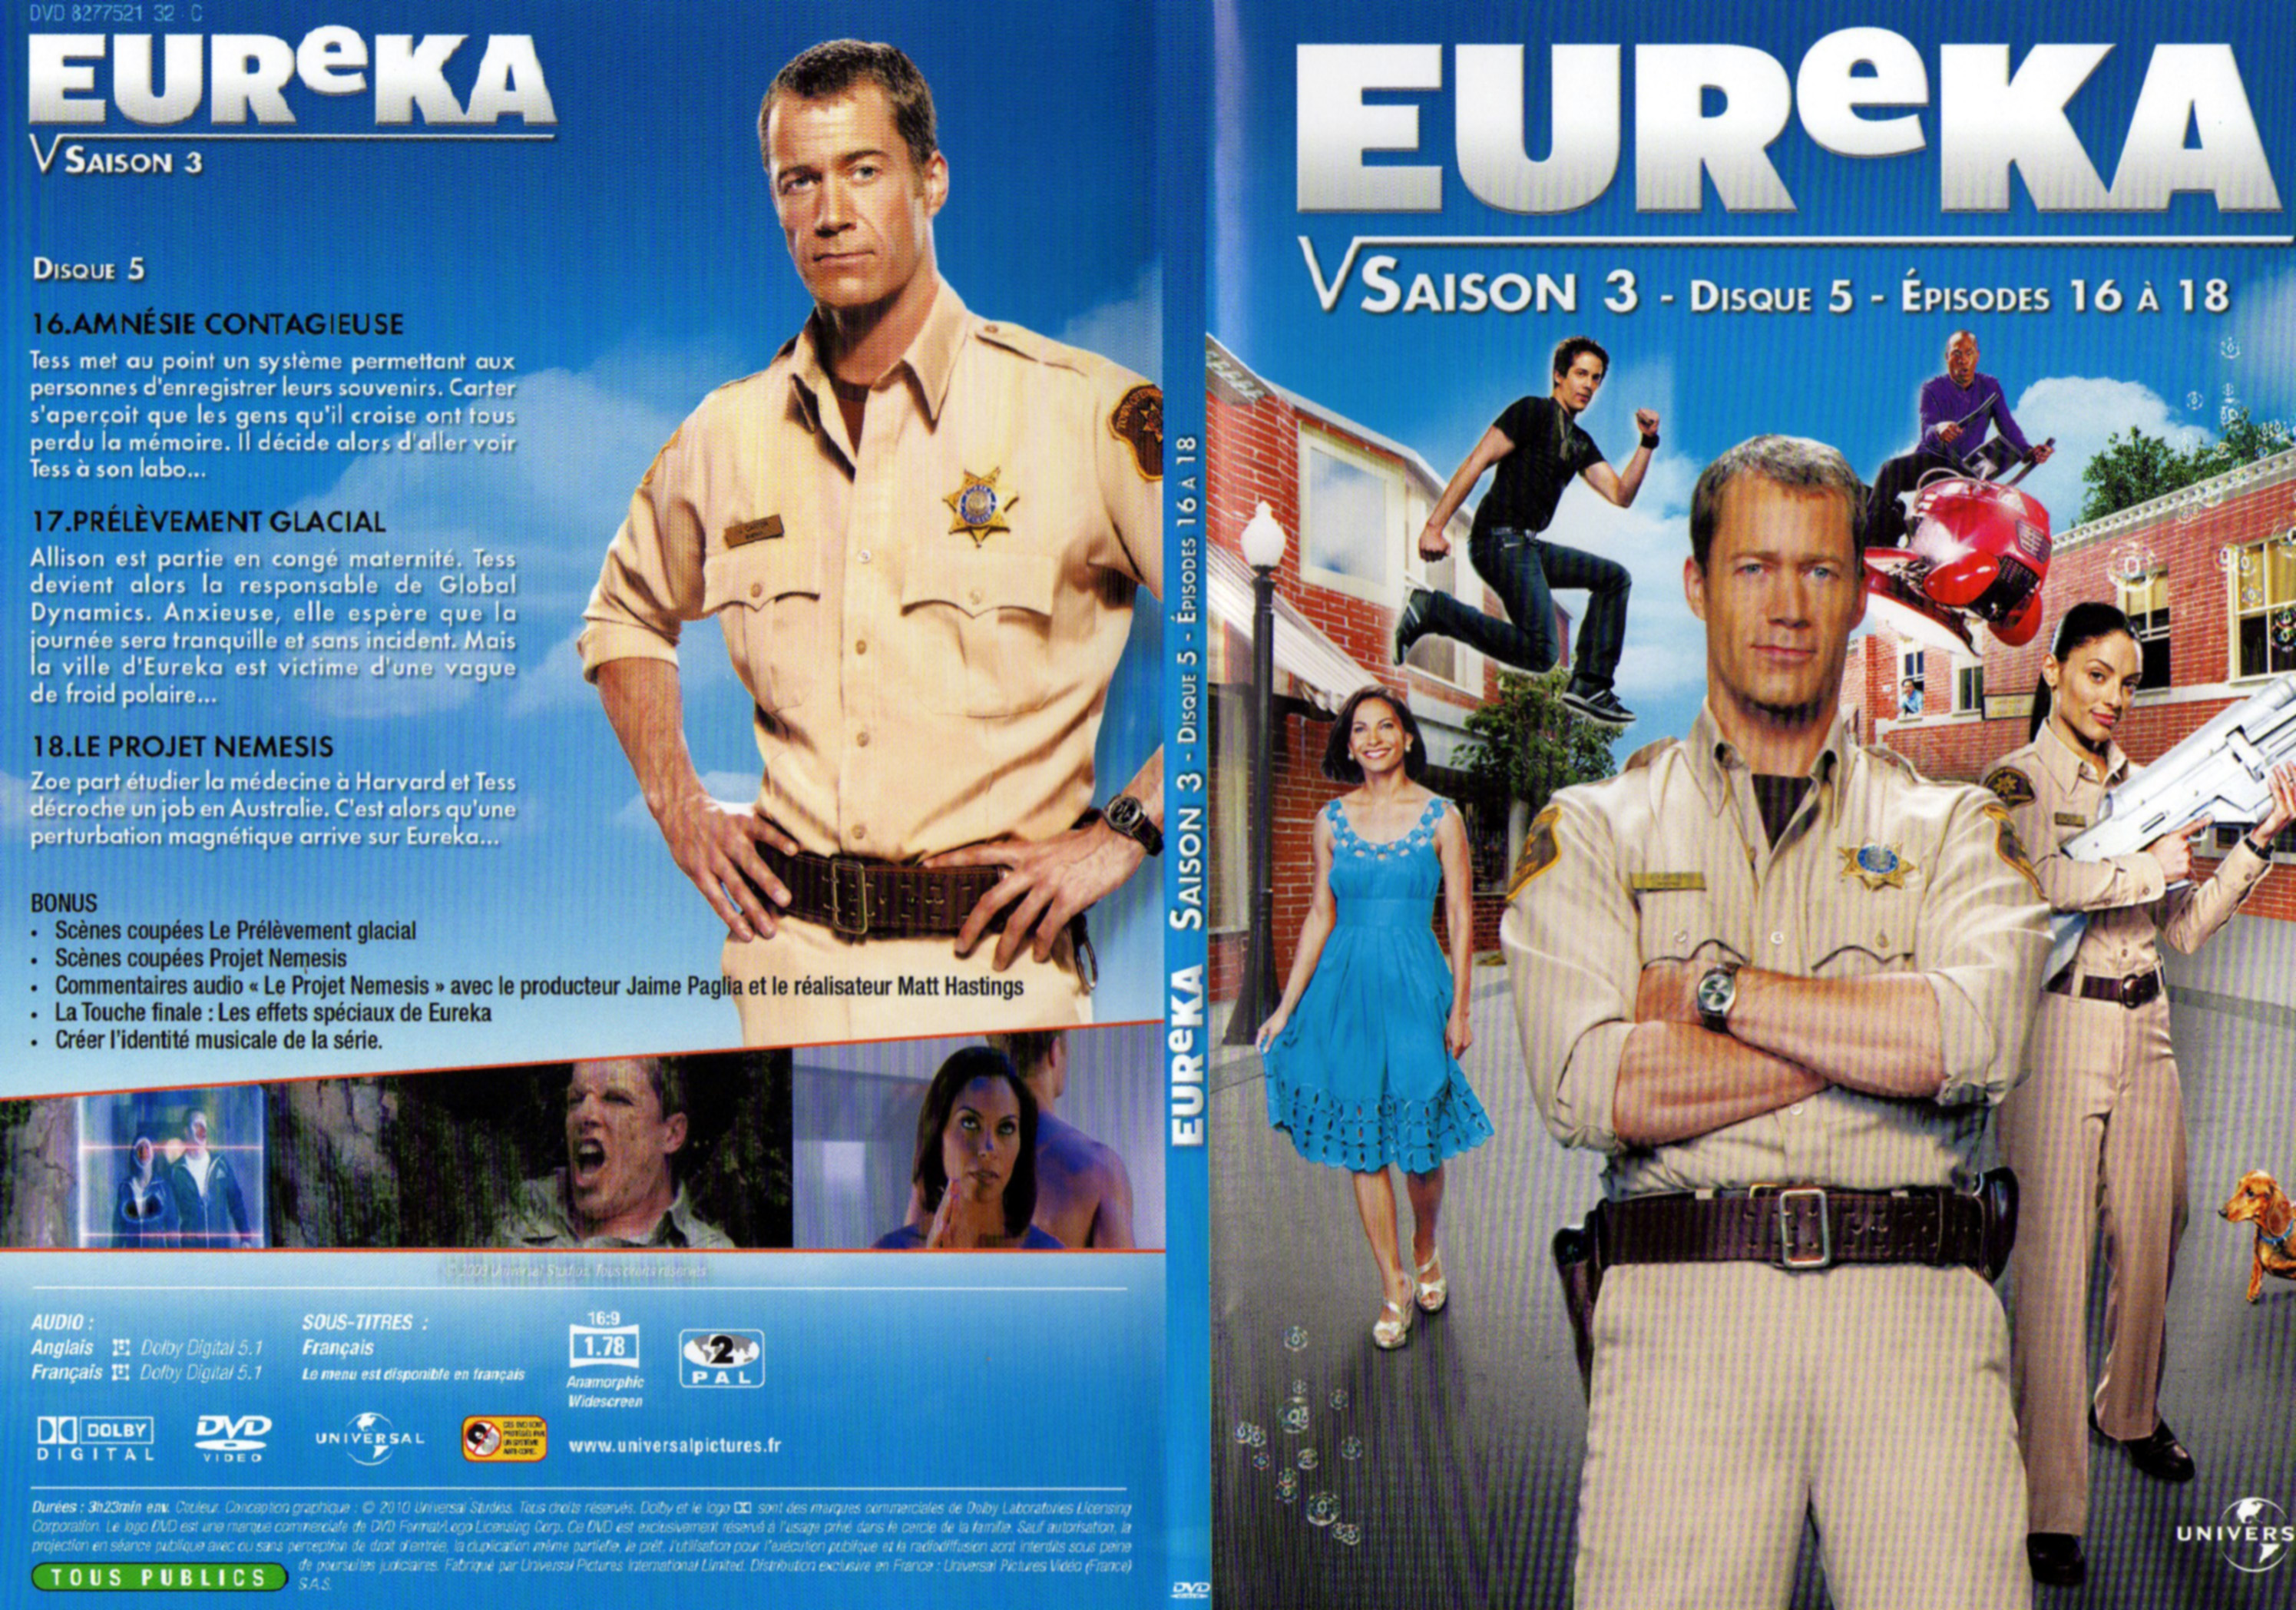 Jaquette DVD Eureka Saison 3 DVD 3